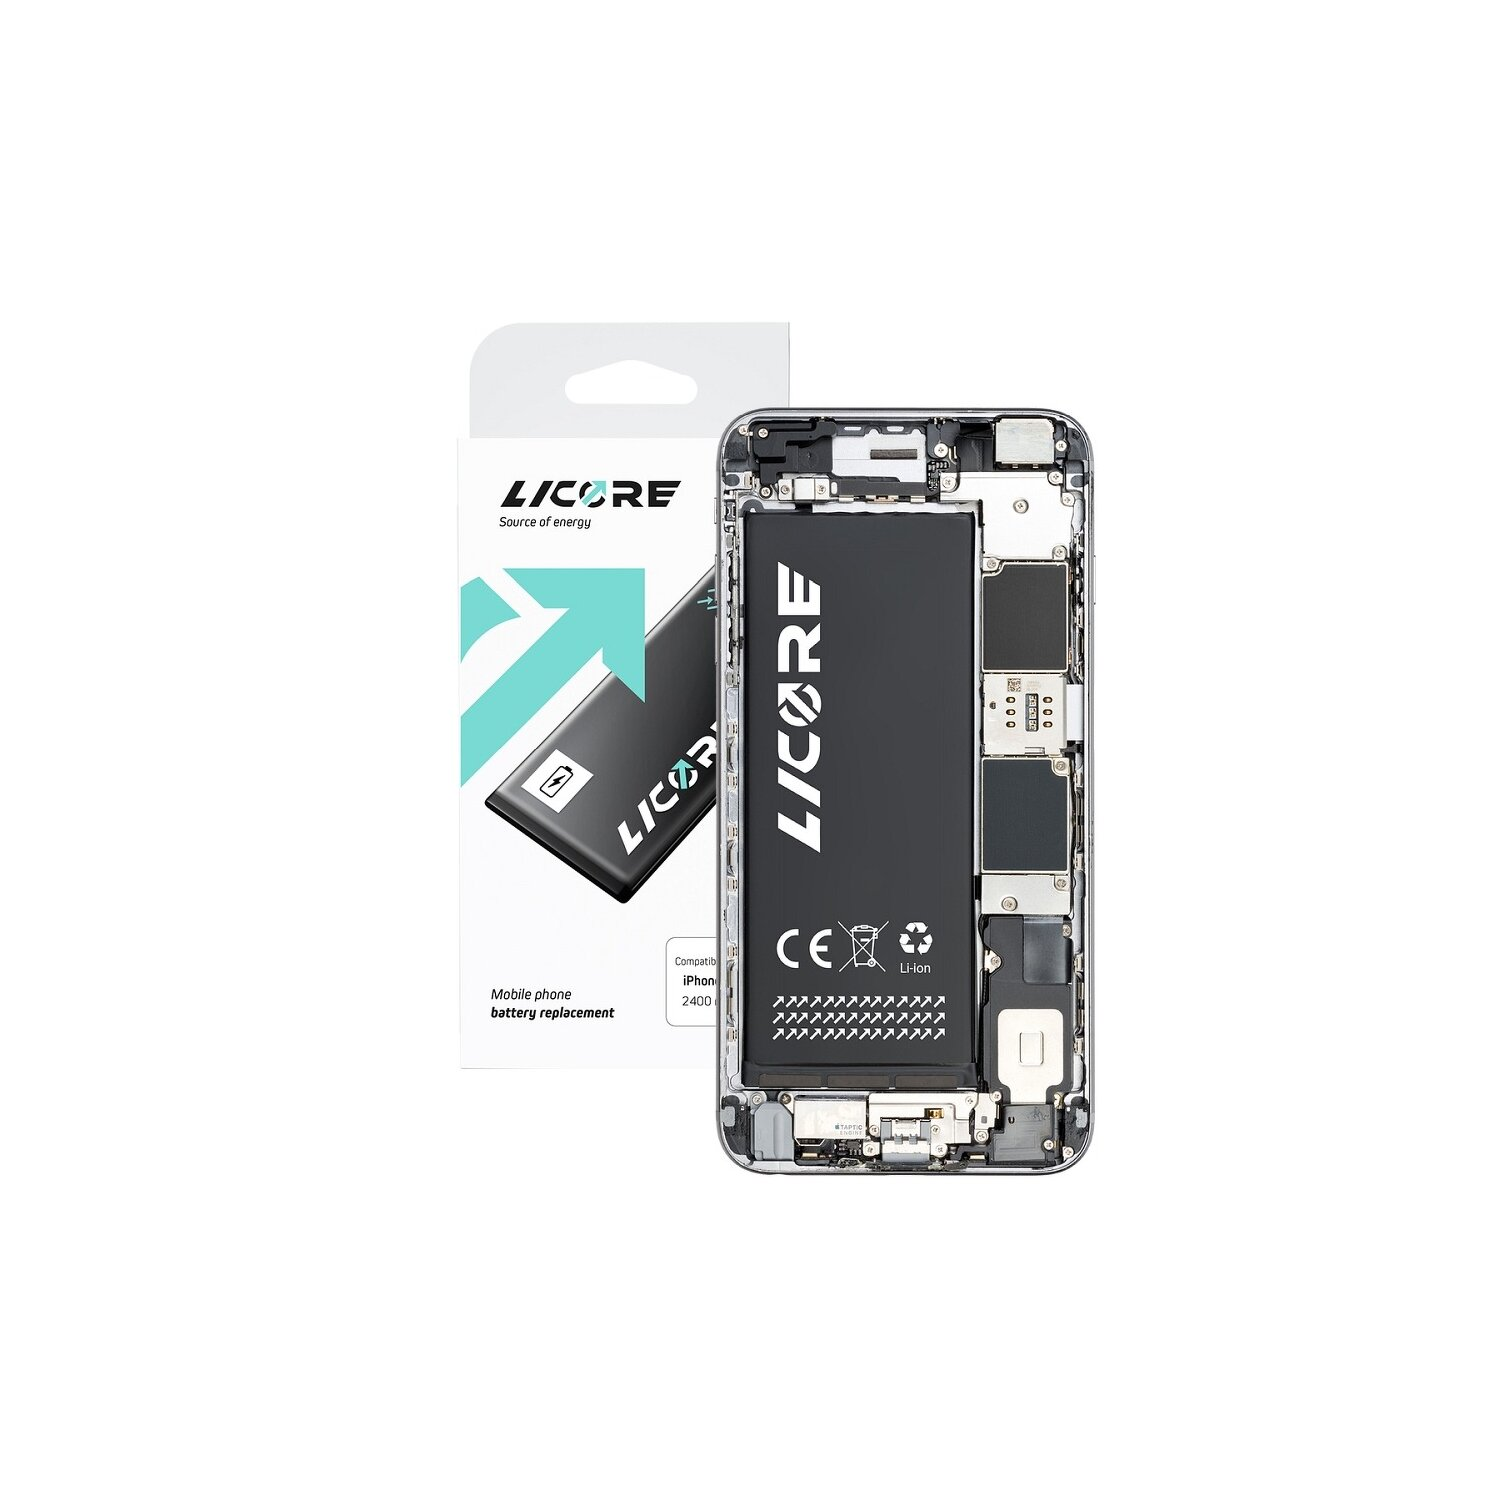 COFI Licore 6 mit Ersatz Akku 1810mAh li-Ion iPhone Akku kompatibel